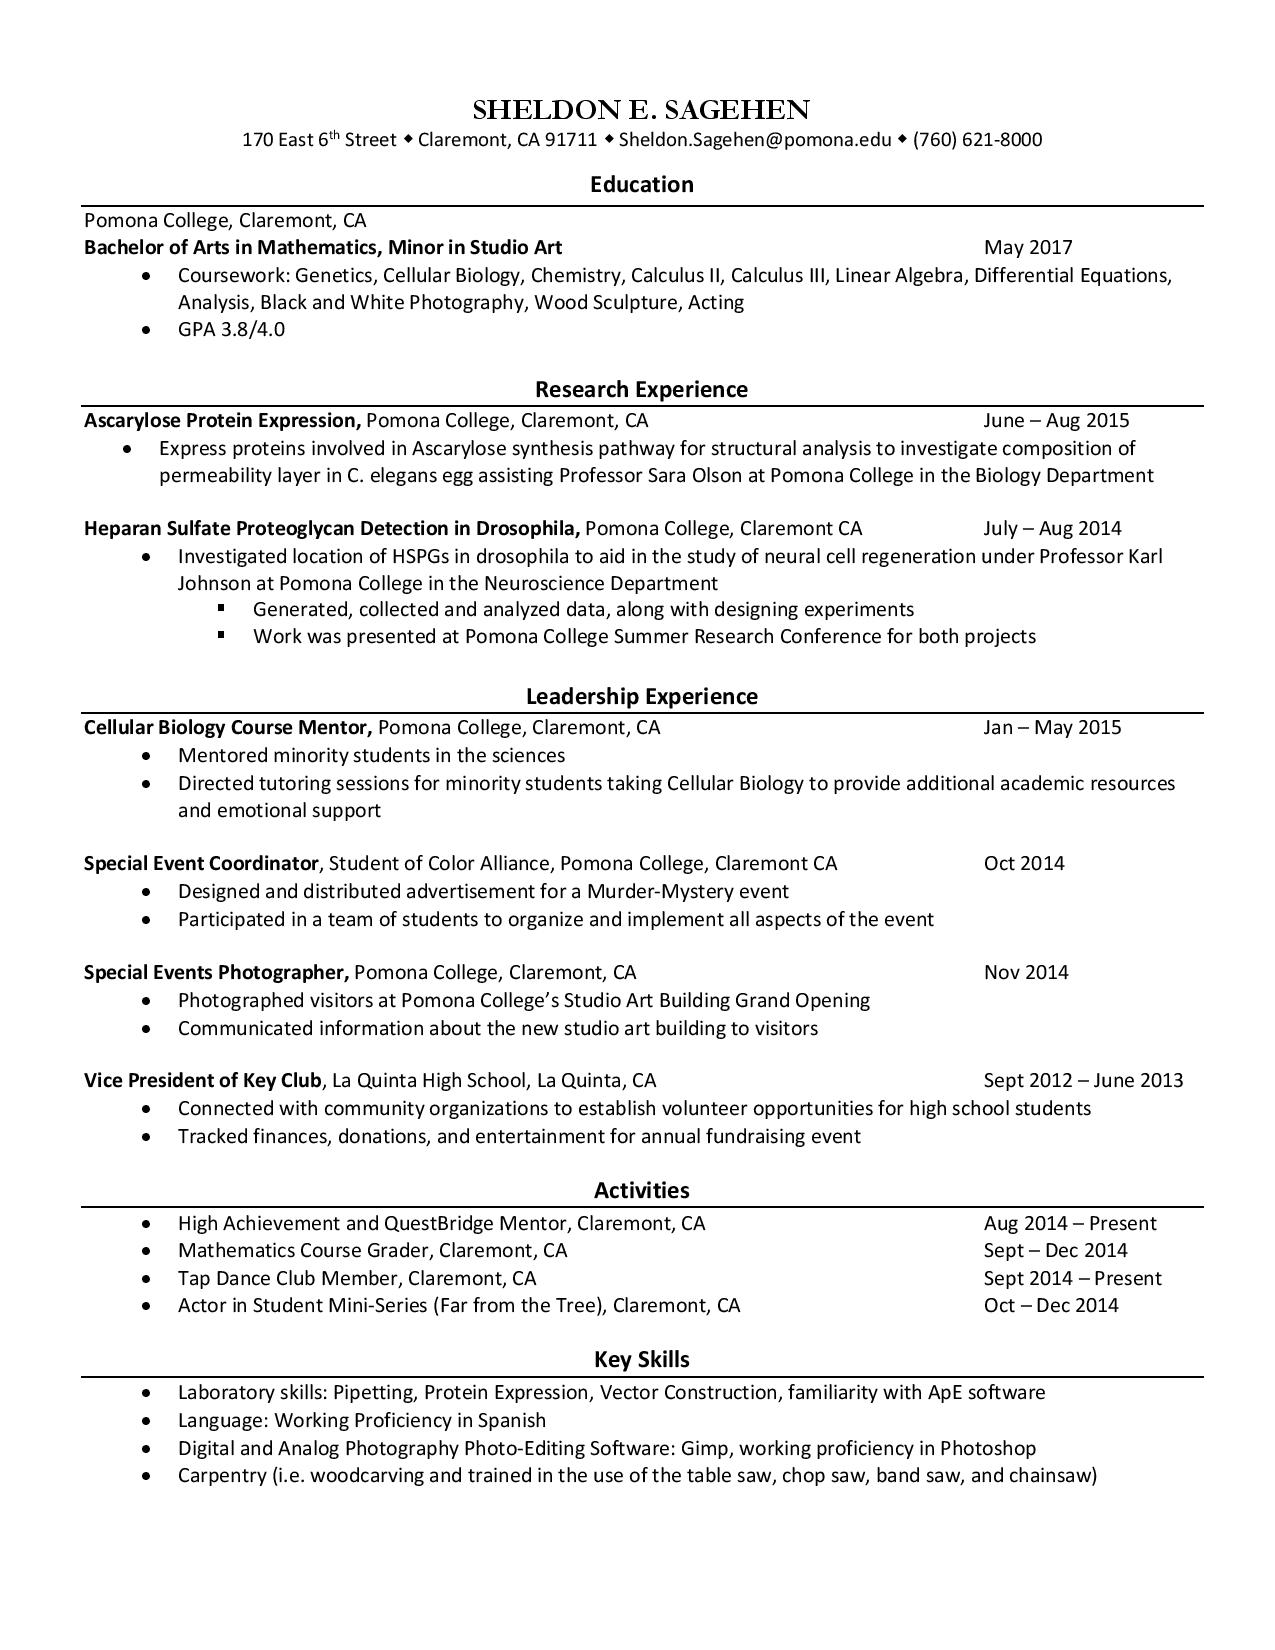 ba mathematics resume